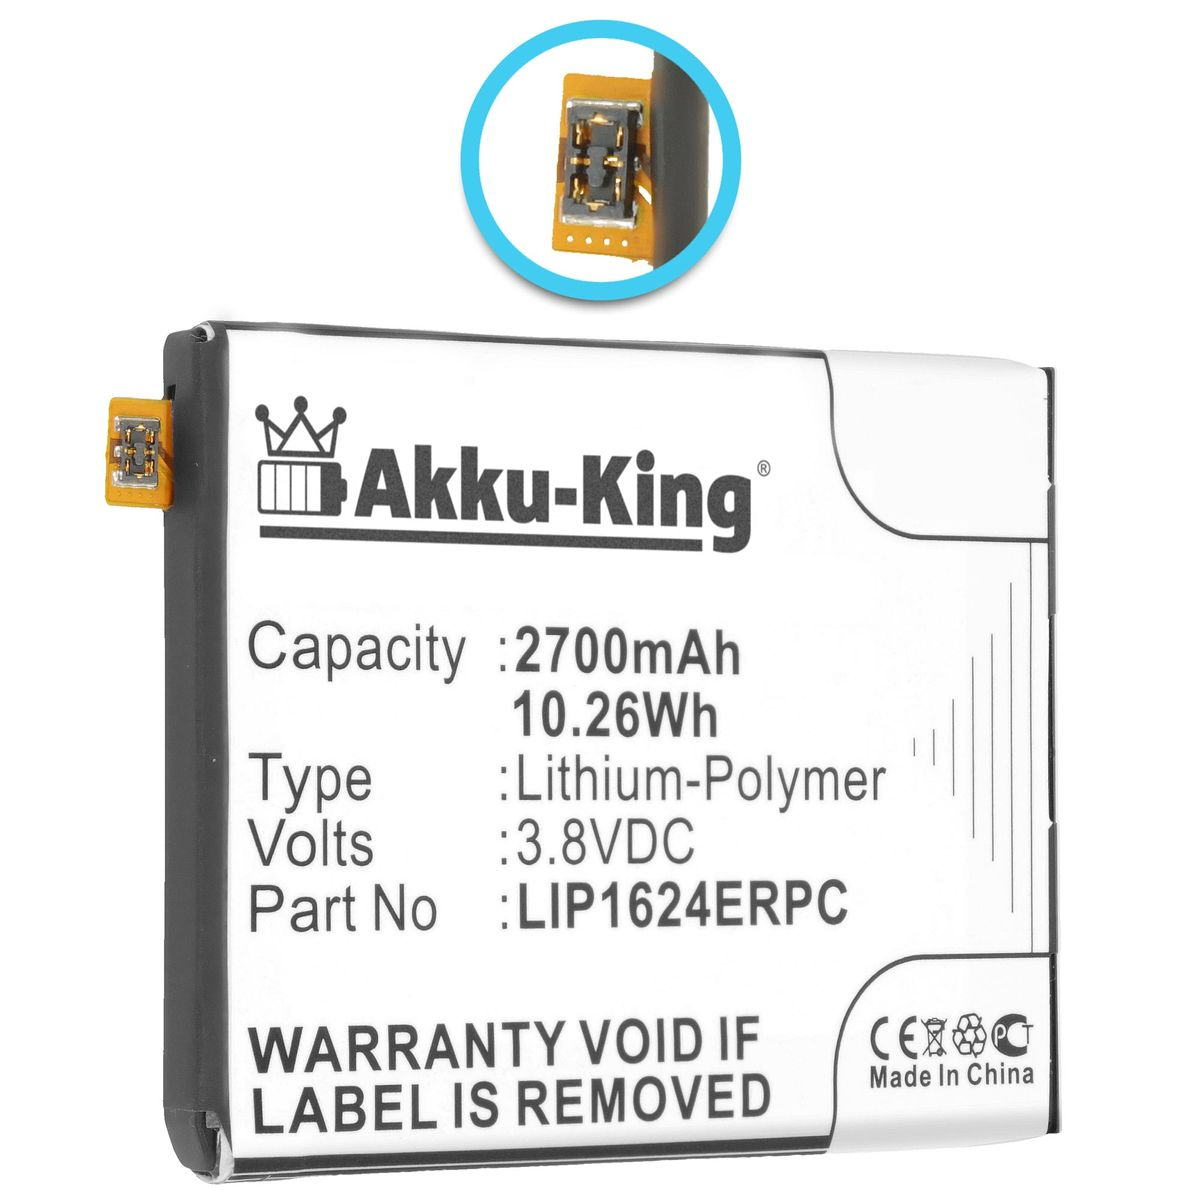 AKKU-KING Akku 3.8 LIP1624ERPC Sony kompatibel Handy-Akku, 2700mAh Volt, Li-Polymer mit